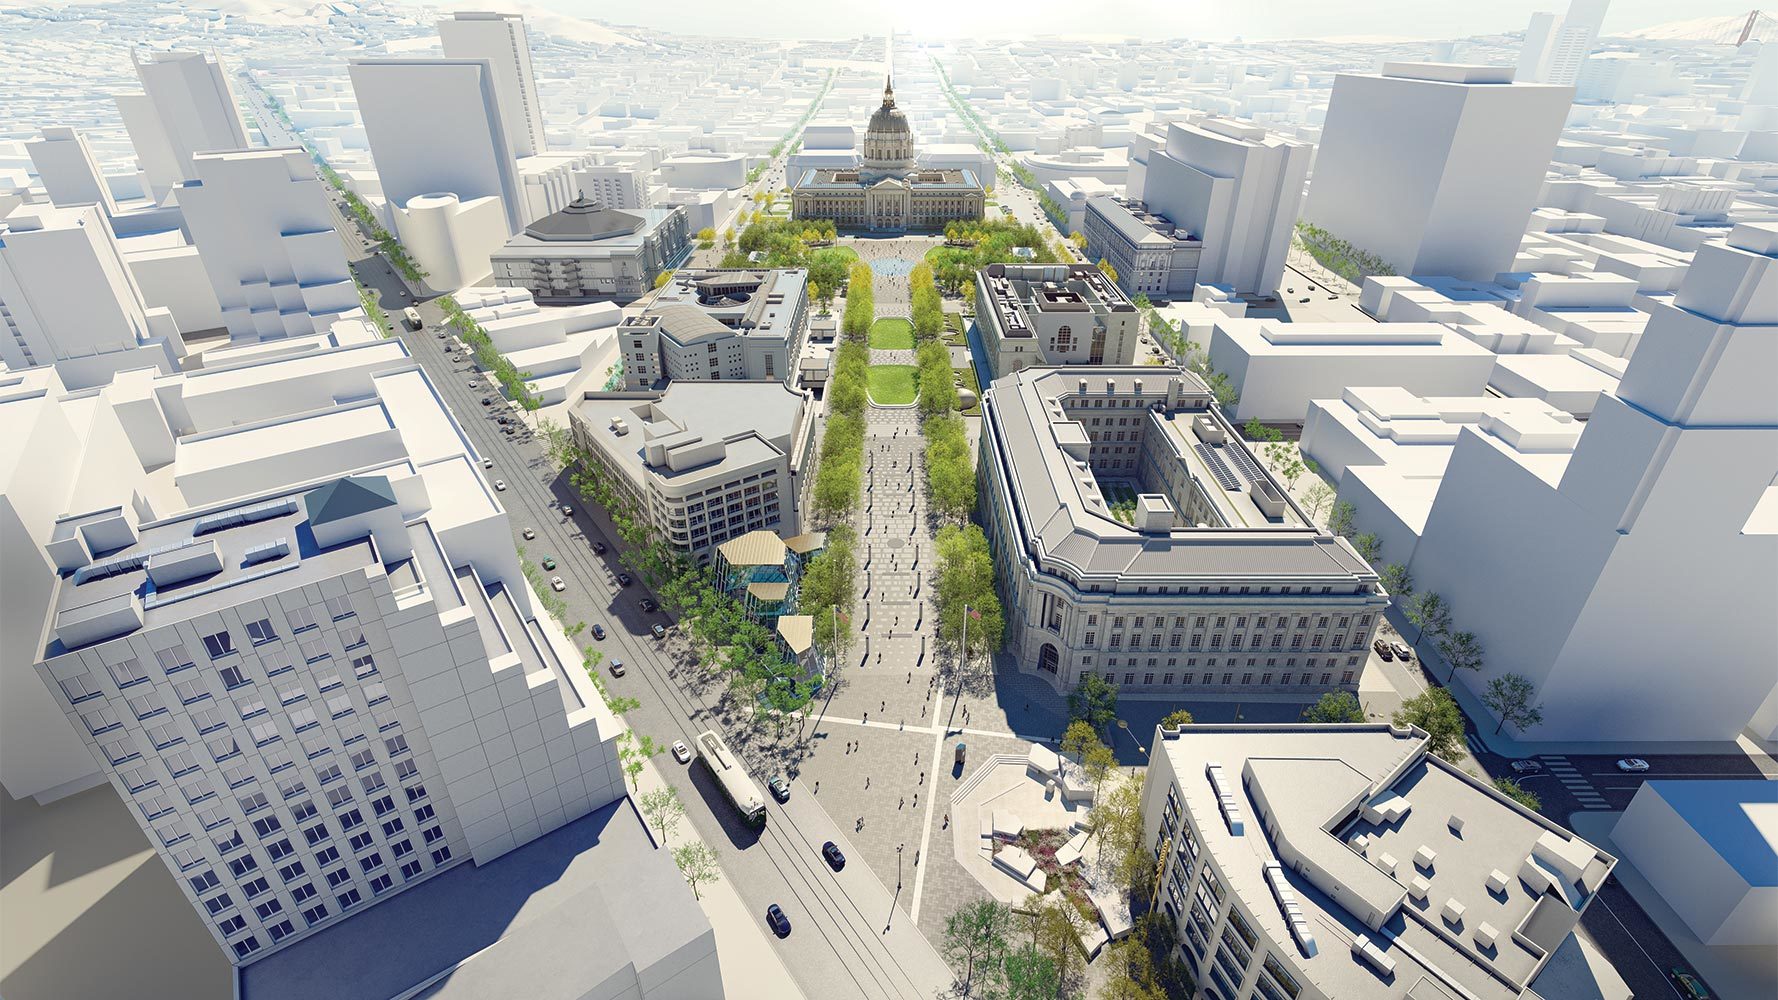 Civic Center Public Space Plan for San Francisco